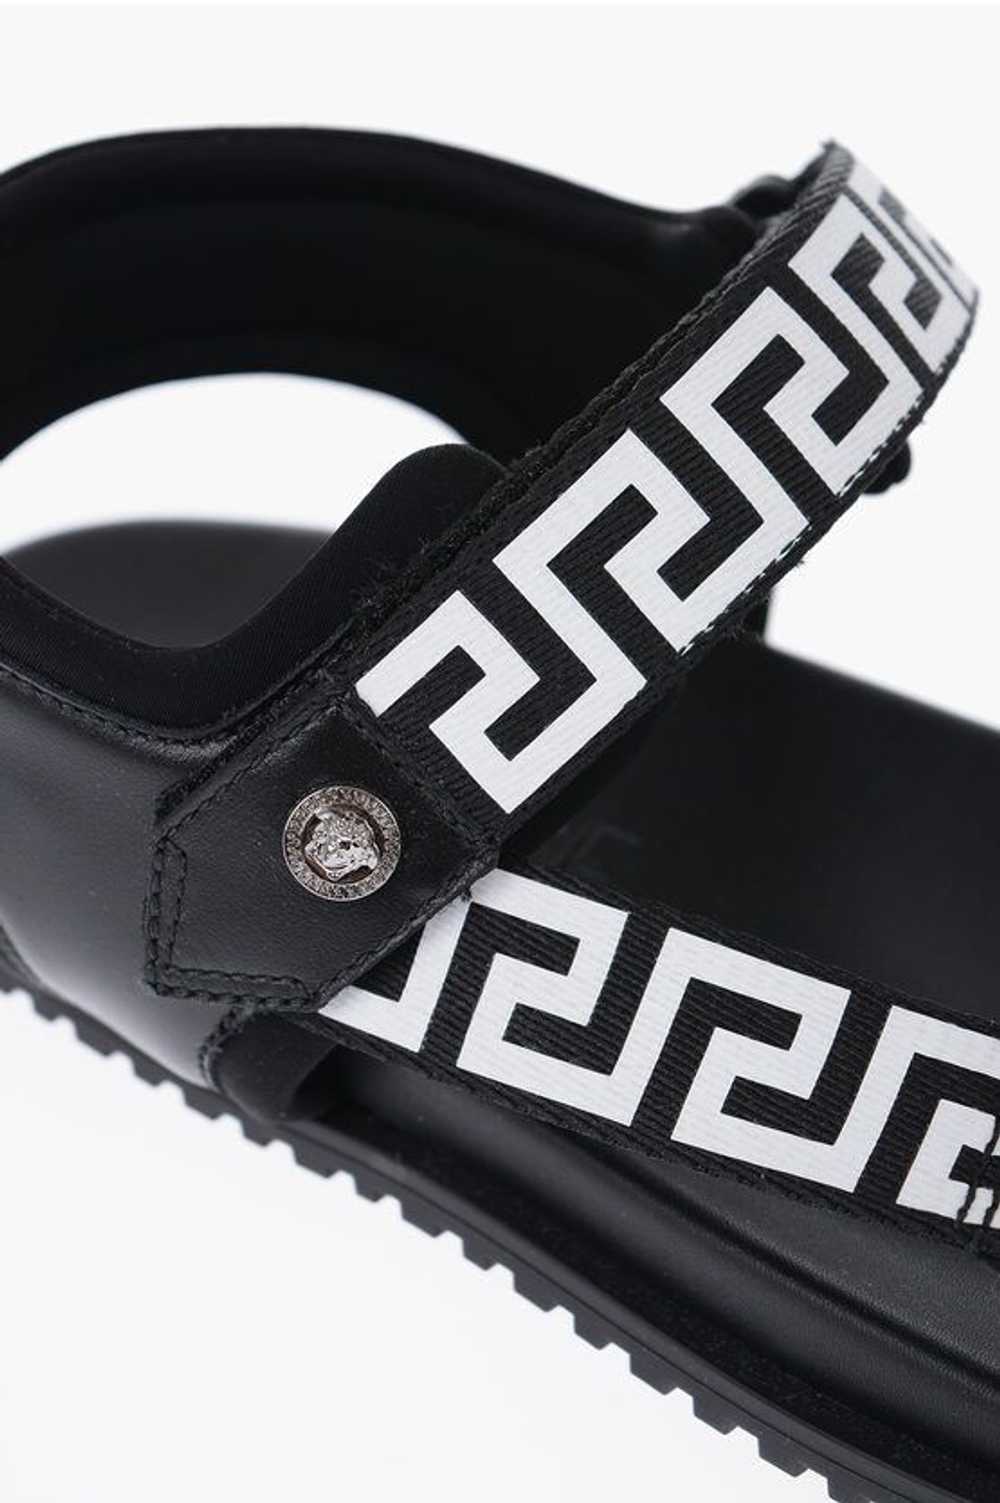 Versace og1mm0524 Fabric Print Sandals in Black - image 4